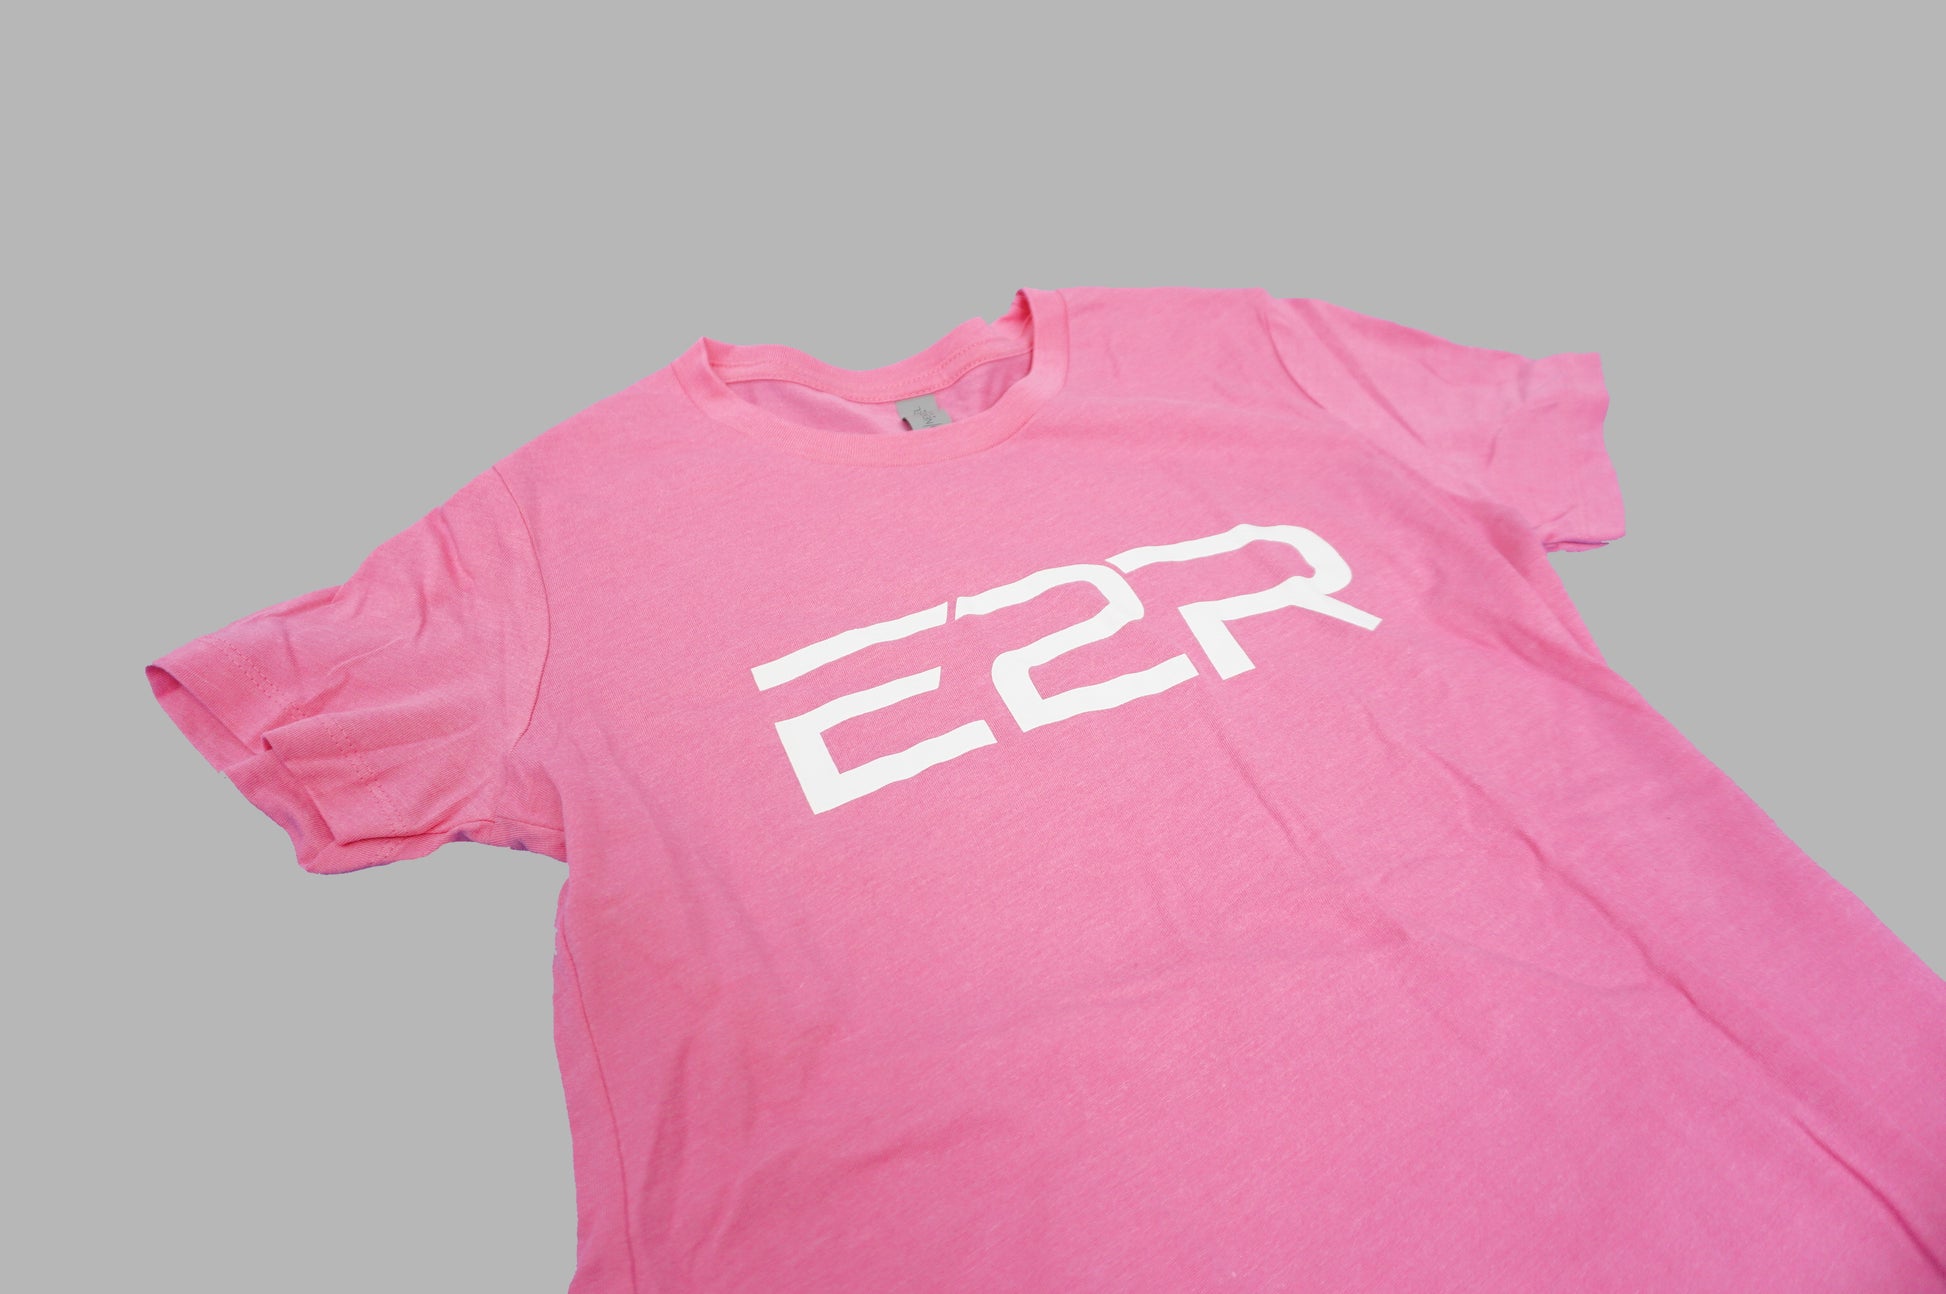 Women's Fit T-Shirt Hot Pink – Shop E2R